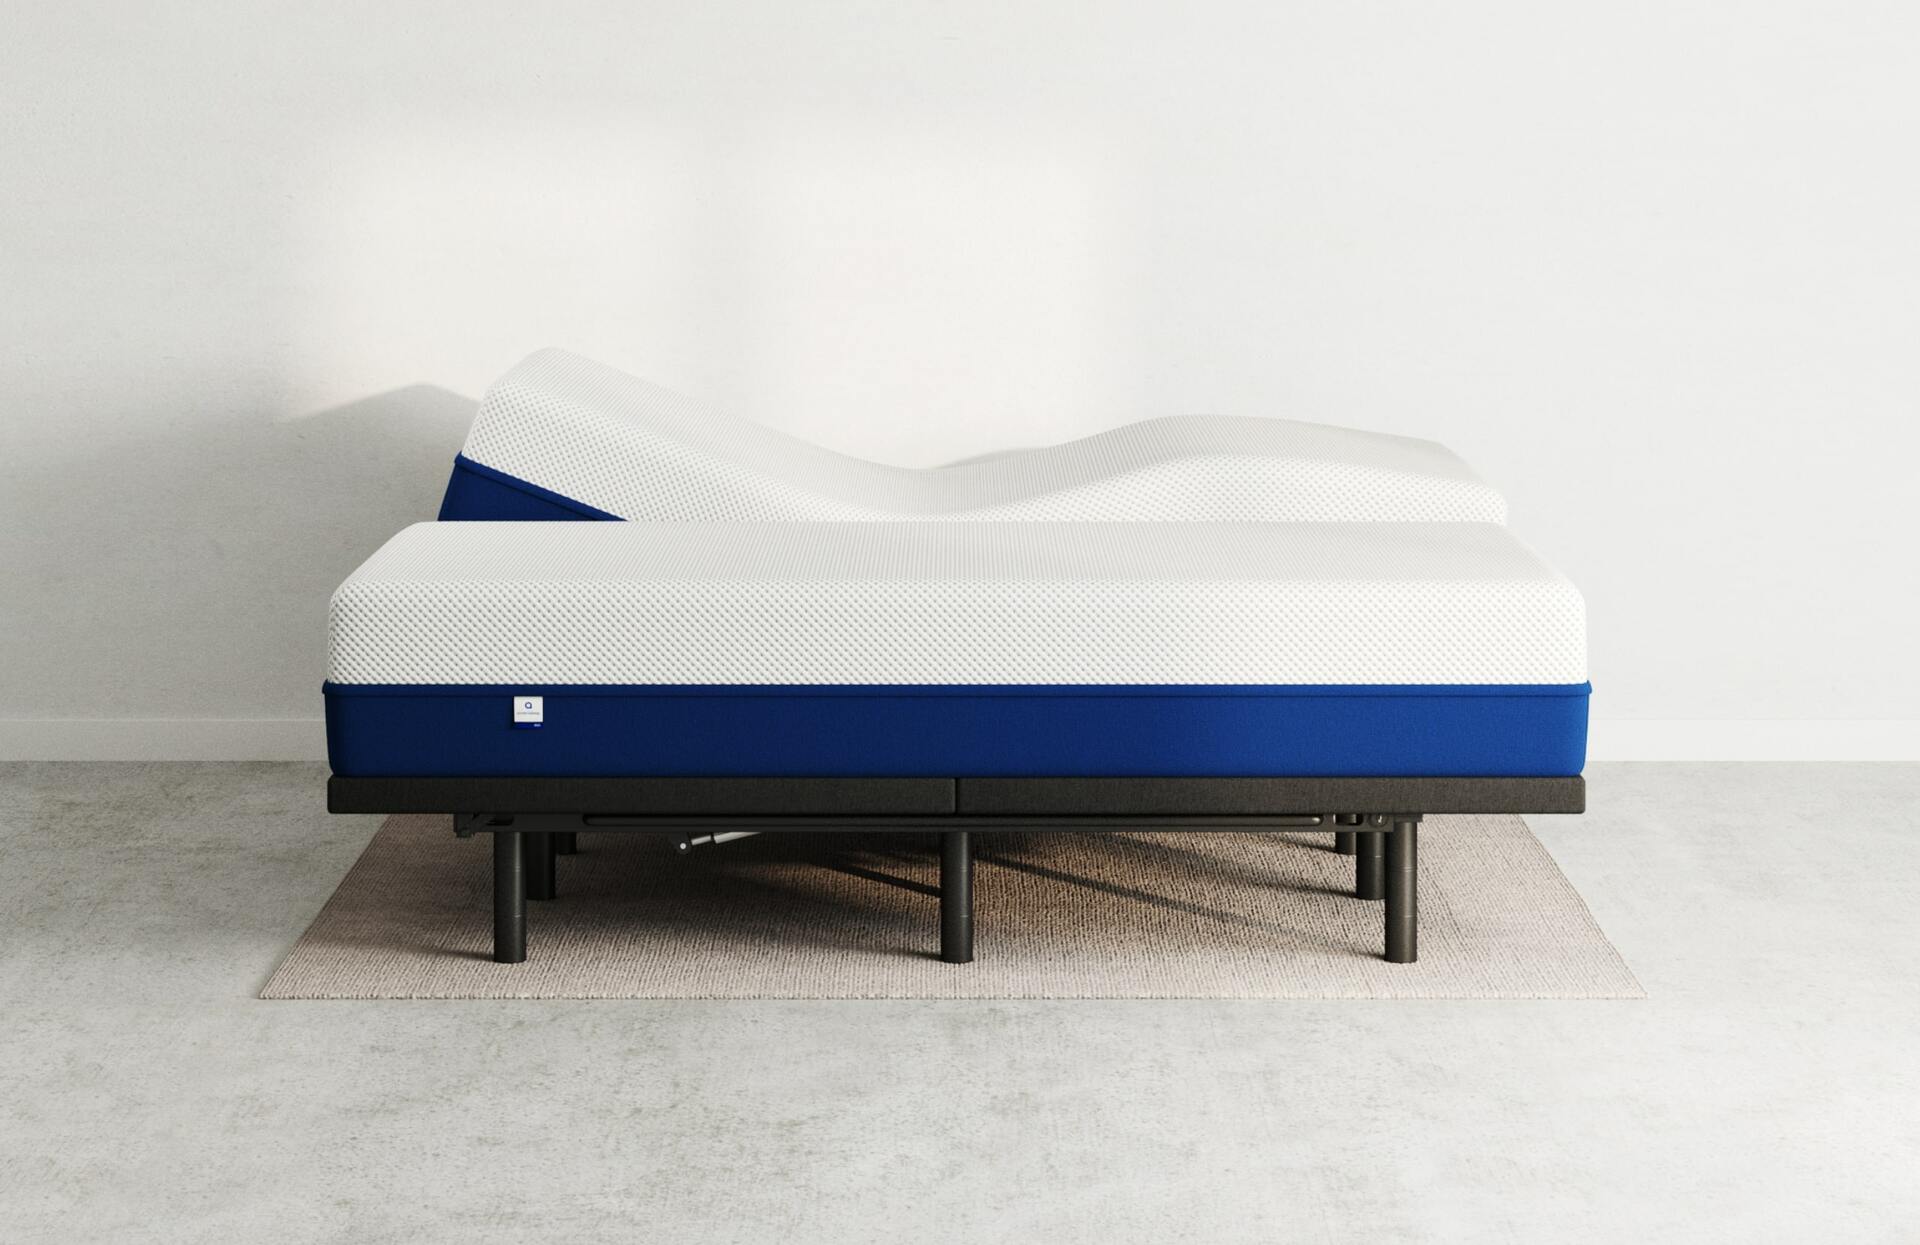 6 Best Bed Frames For Sleep Number Bed Reviewed In Detail Jul 2021